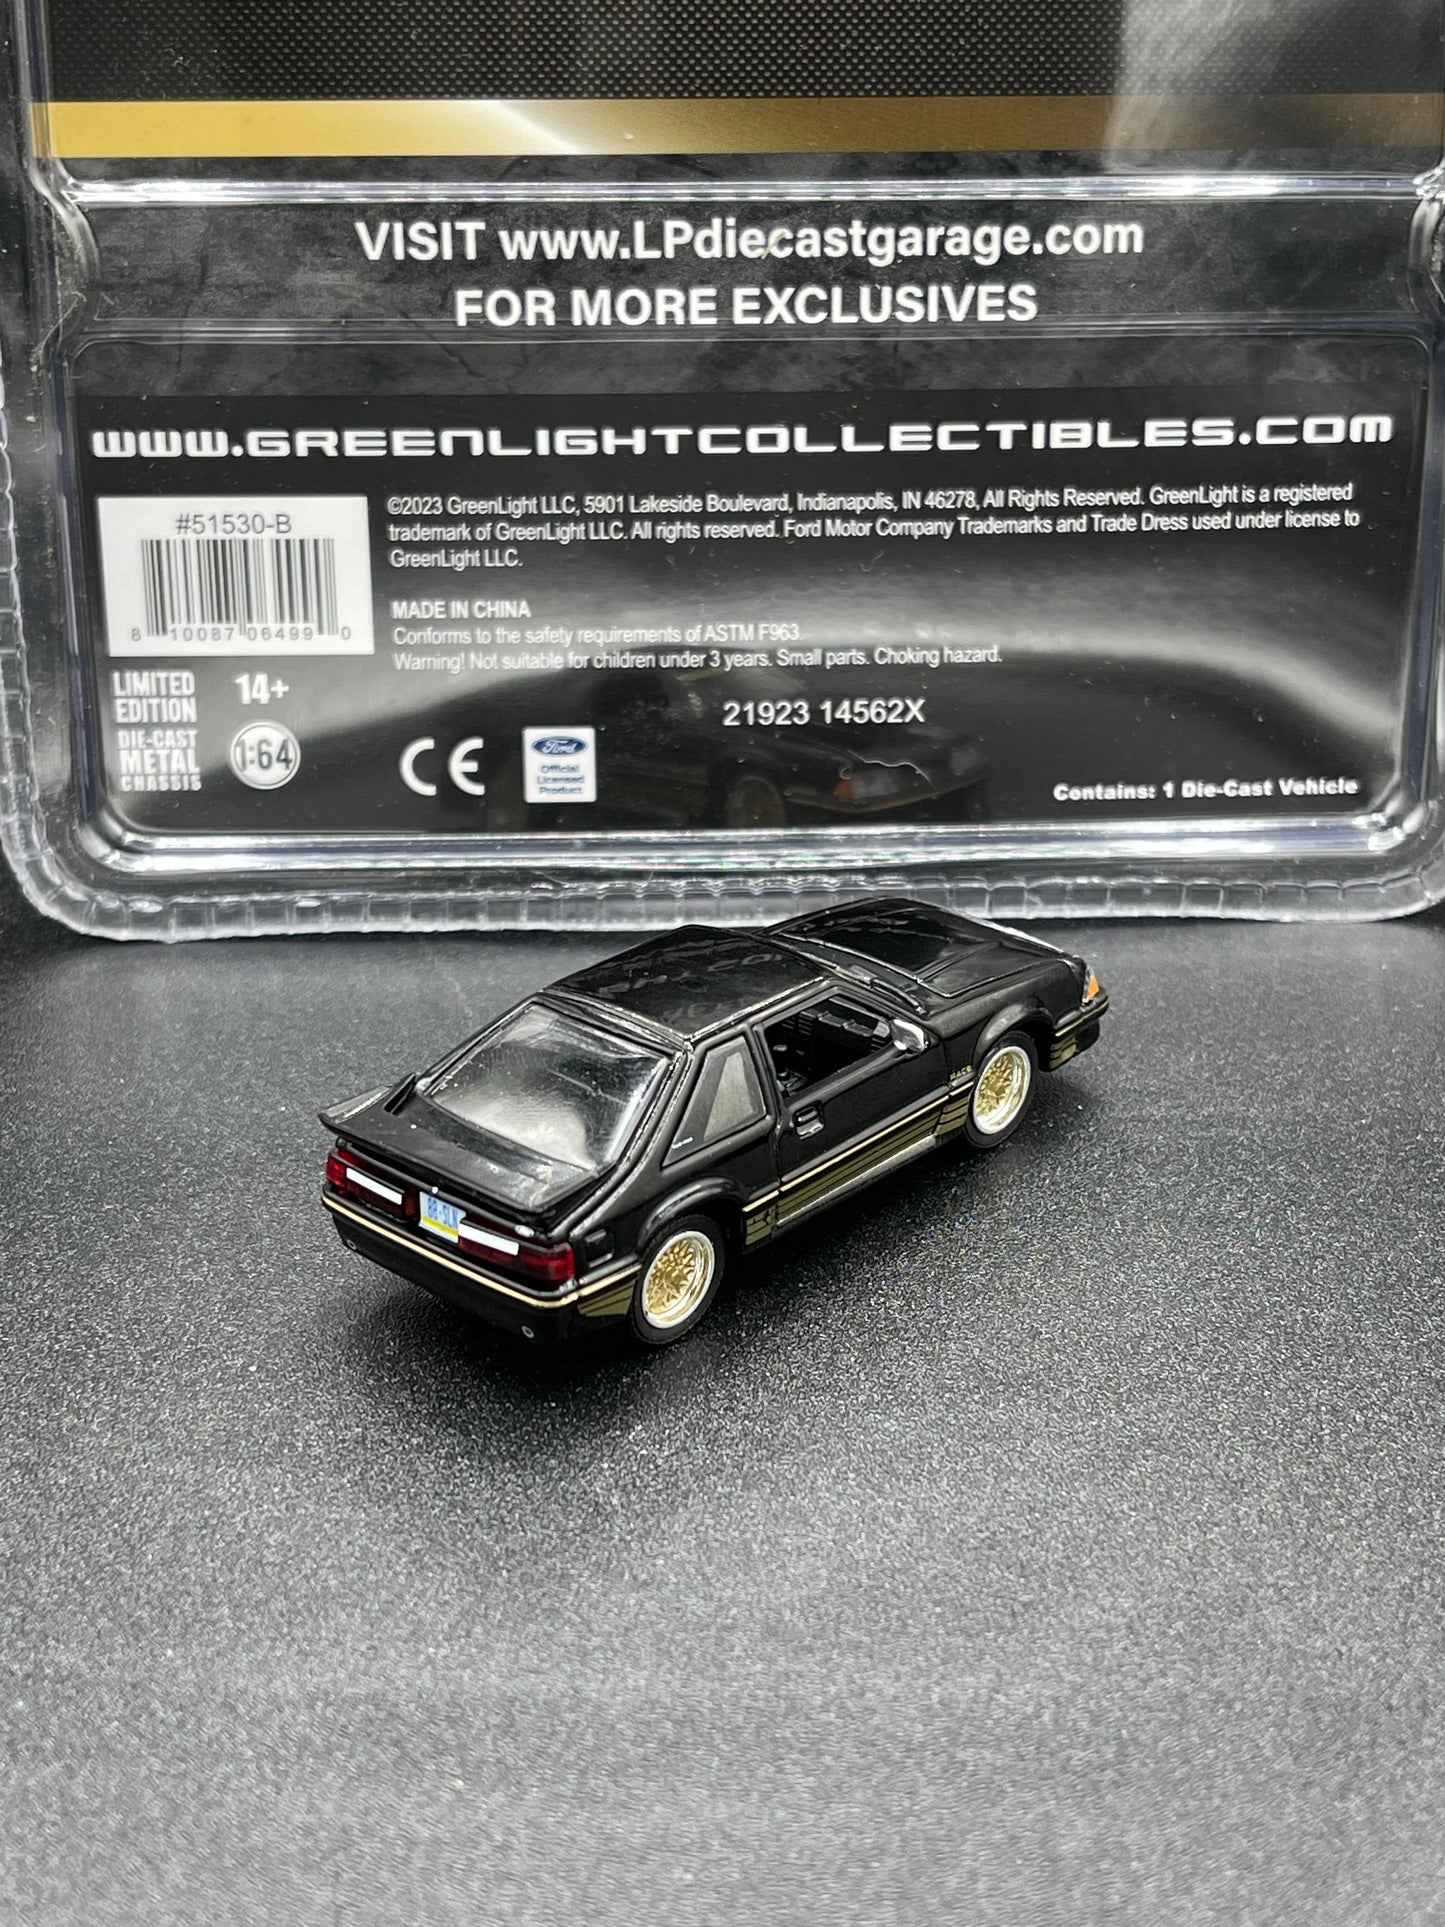 GREENLIGHT 1988 Ford Mustang Motorsport "SLN" Black with Gold Decals LP Diecast Garage Exclusive 1:64 Diecast Promo